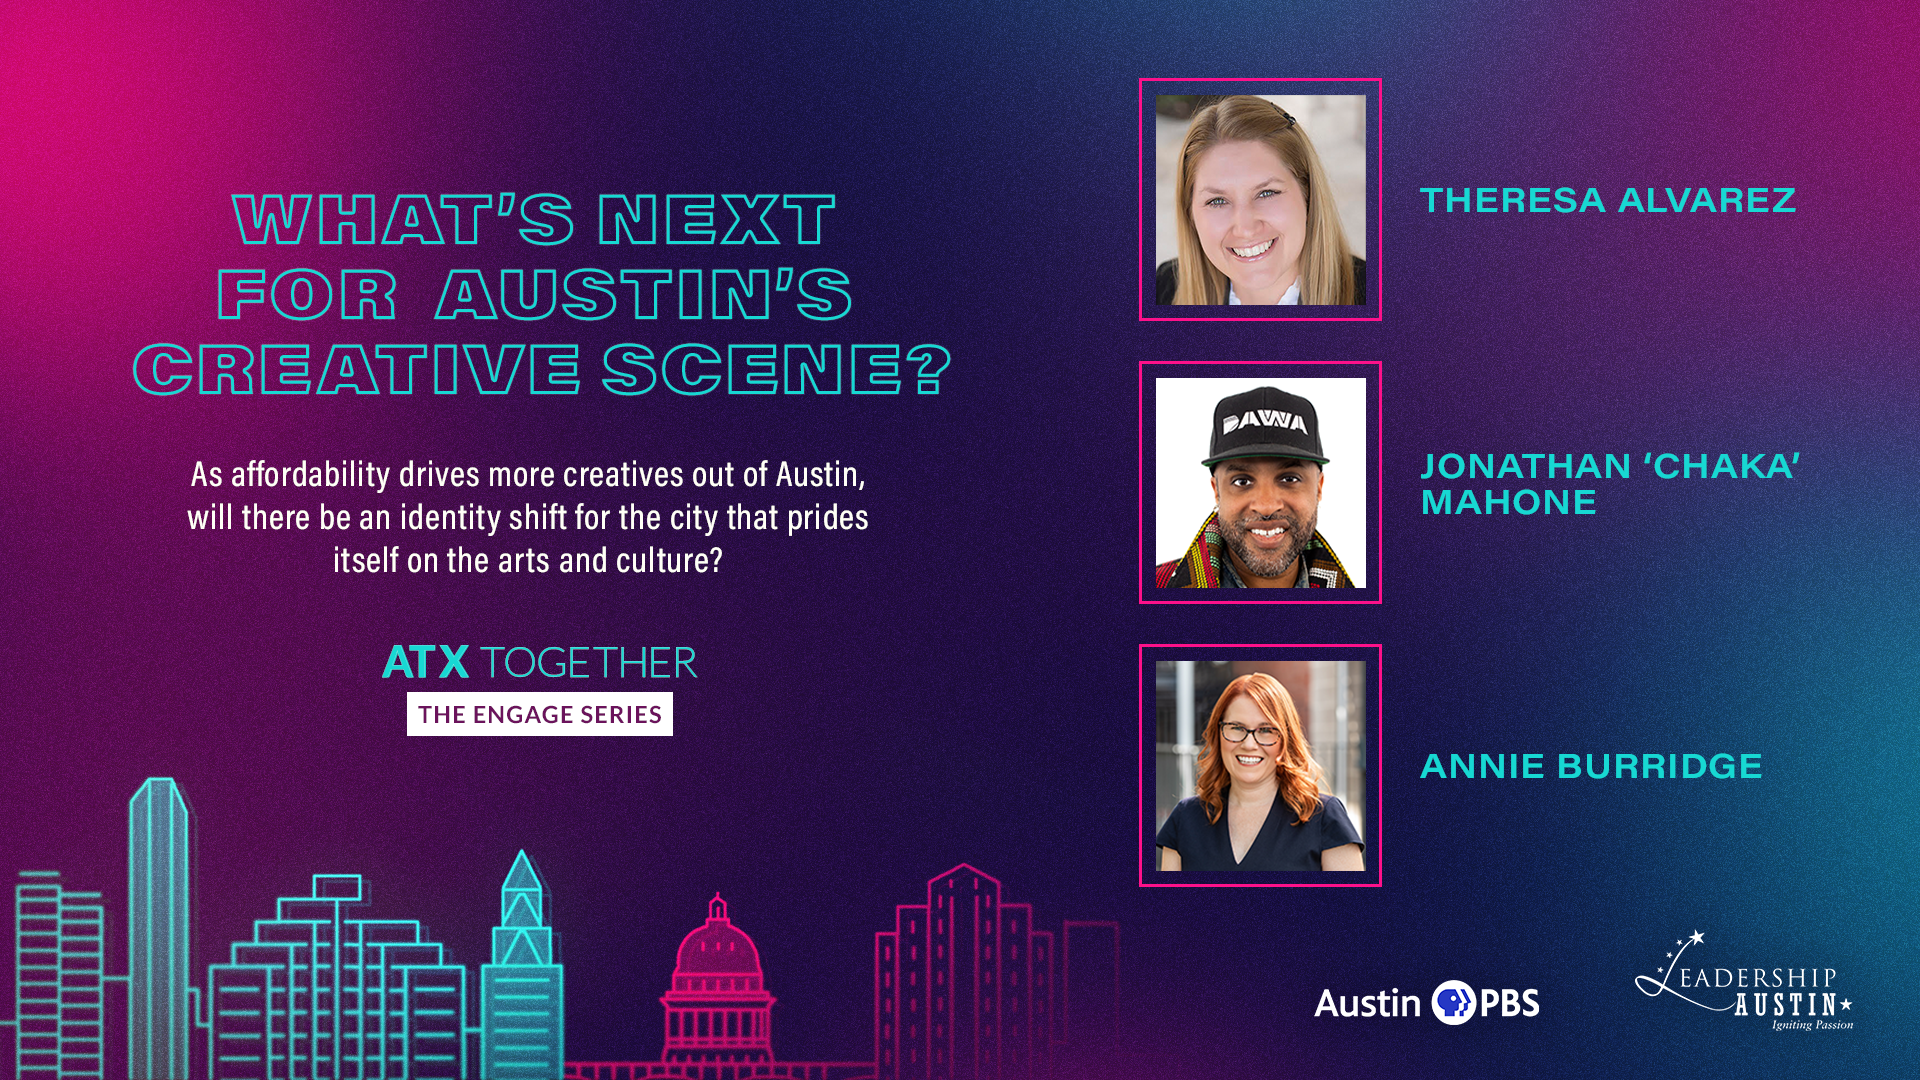 What's Next For Ausitn's Creative Scene? ATX Together Engage Series with Theresa Alvarez, Jonathan 'Chaka' Mahone and Anne Burridge.